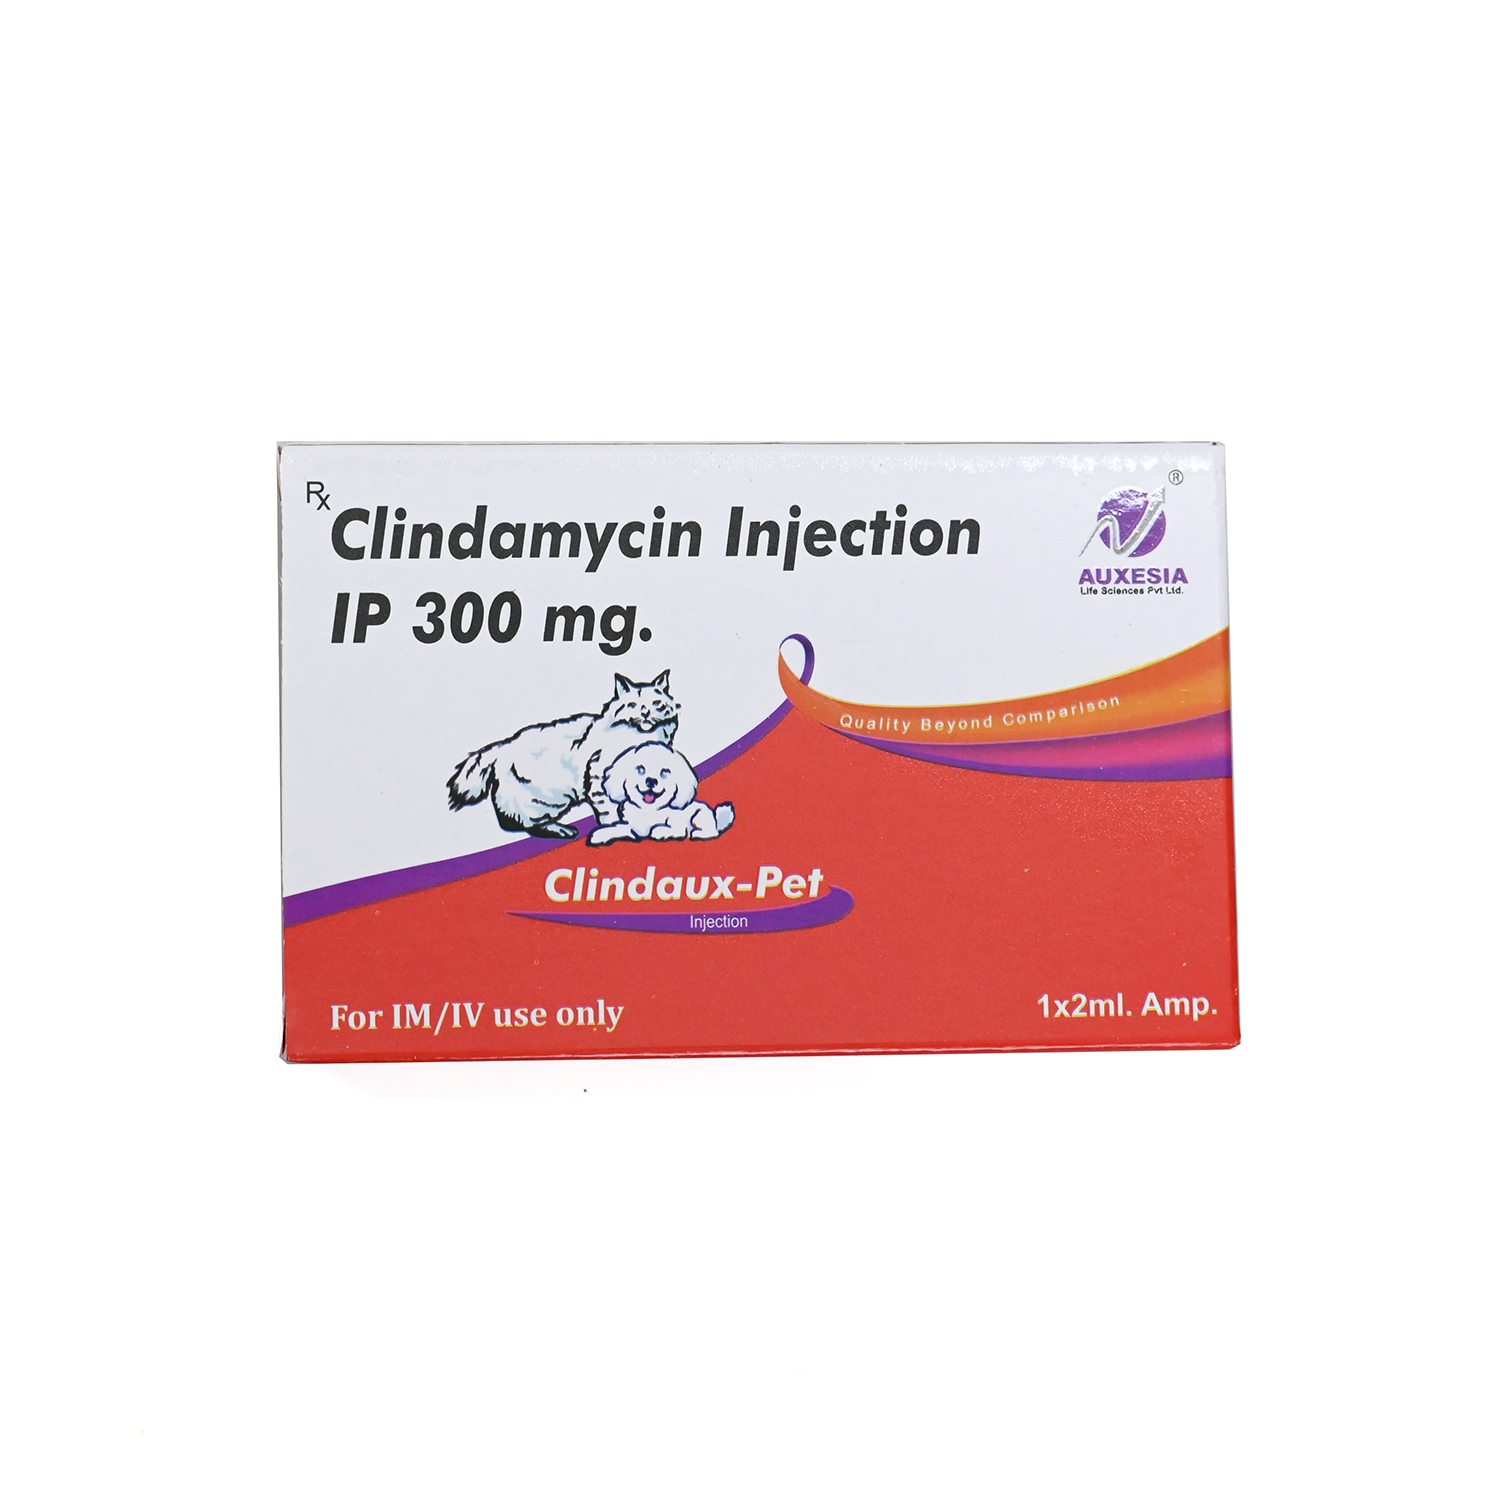 ClindAux-Pet Injection IP 300mg